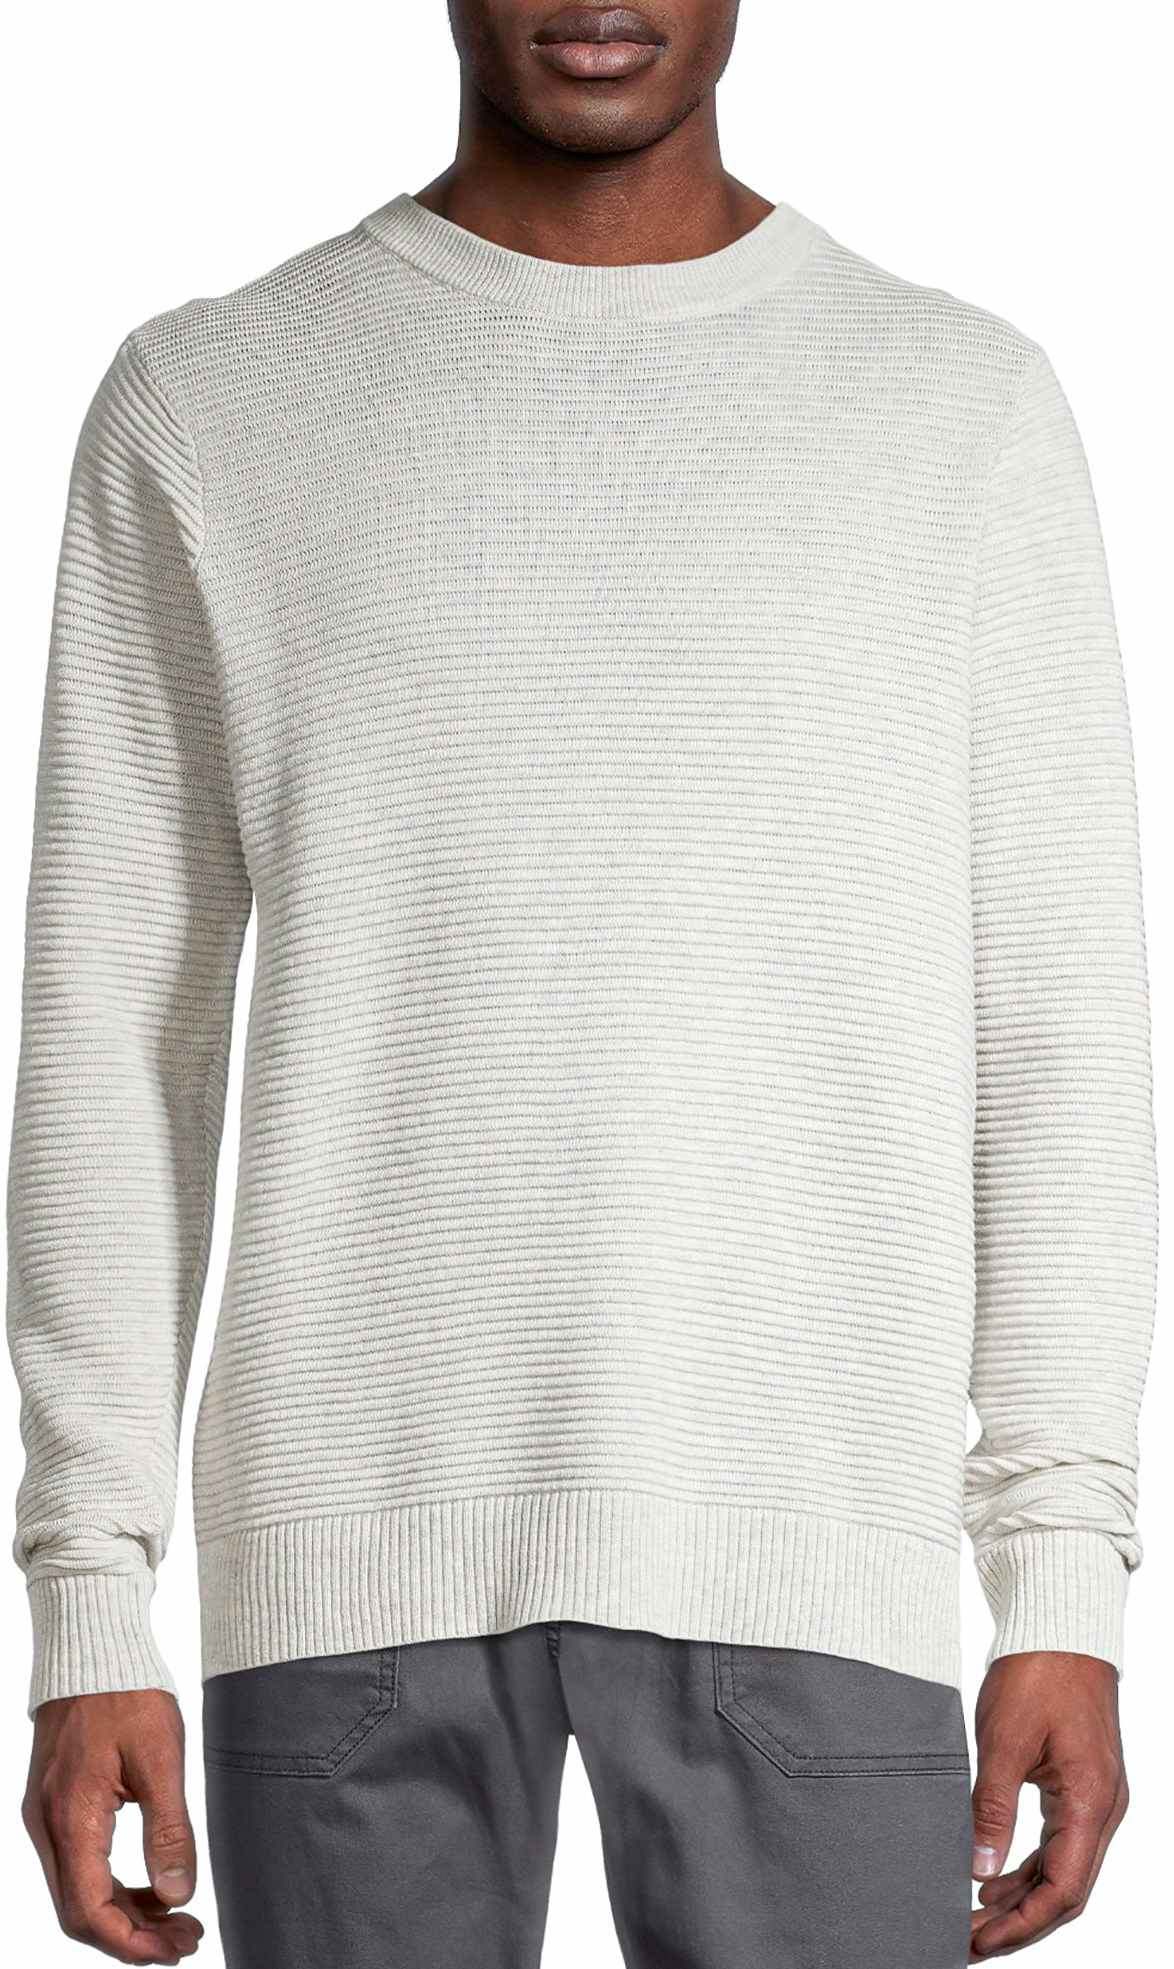 walmart-tribekka-44-ottomon-crewneck-sweater-2022